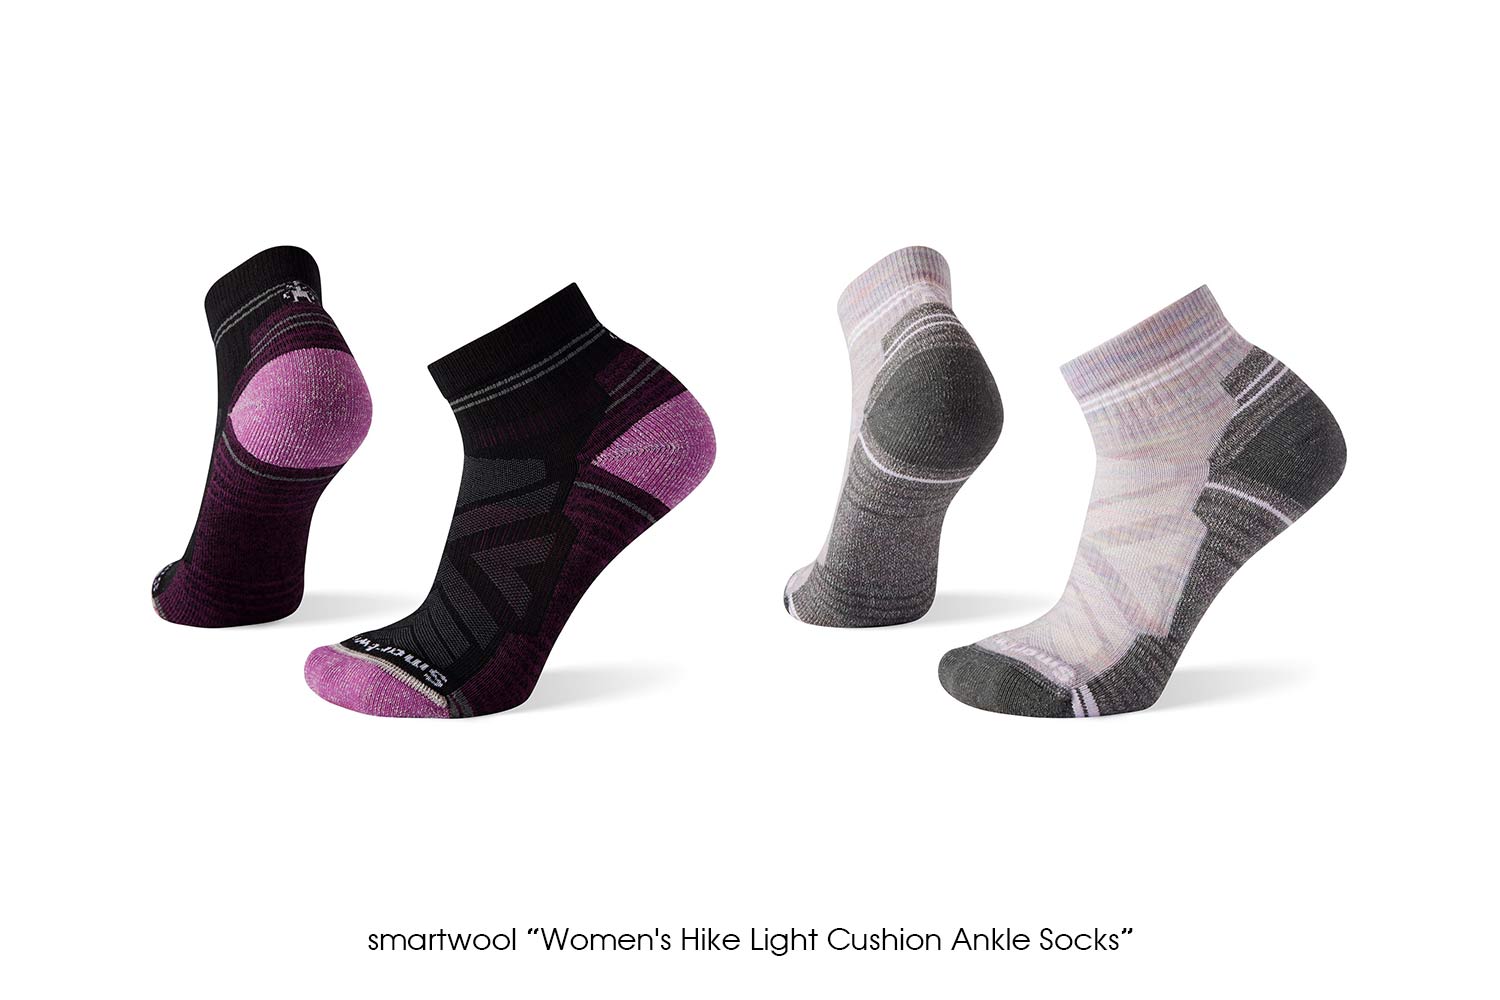 smartwool "Women's Hike Light Cushion Ankle Socks"